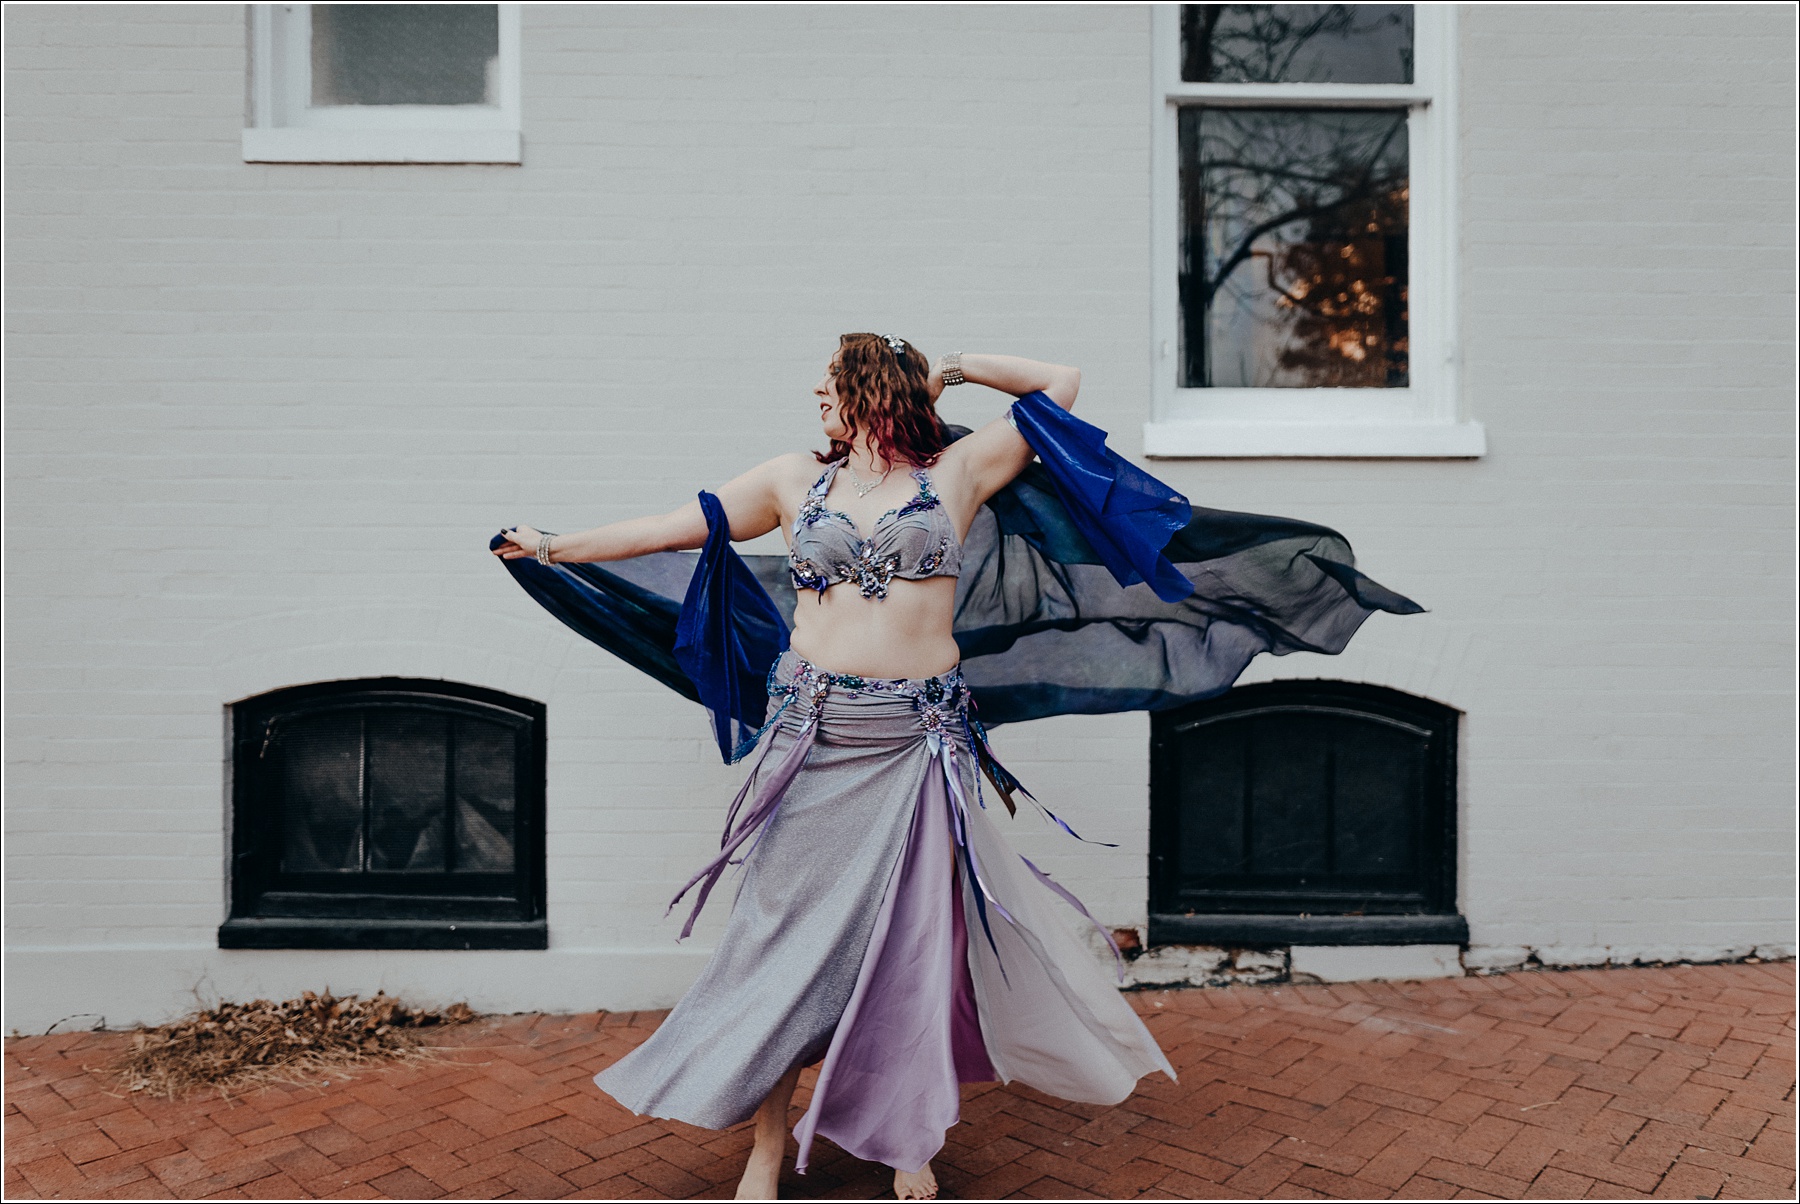 belly dance photoshoot in purple costume on brick sidewalk in frederick maryland